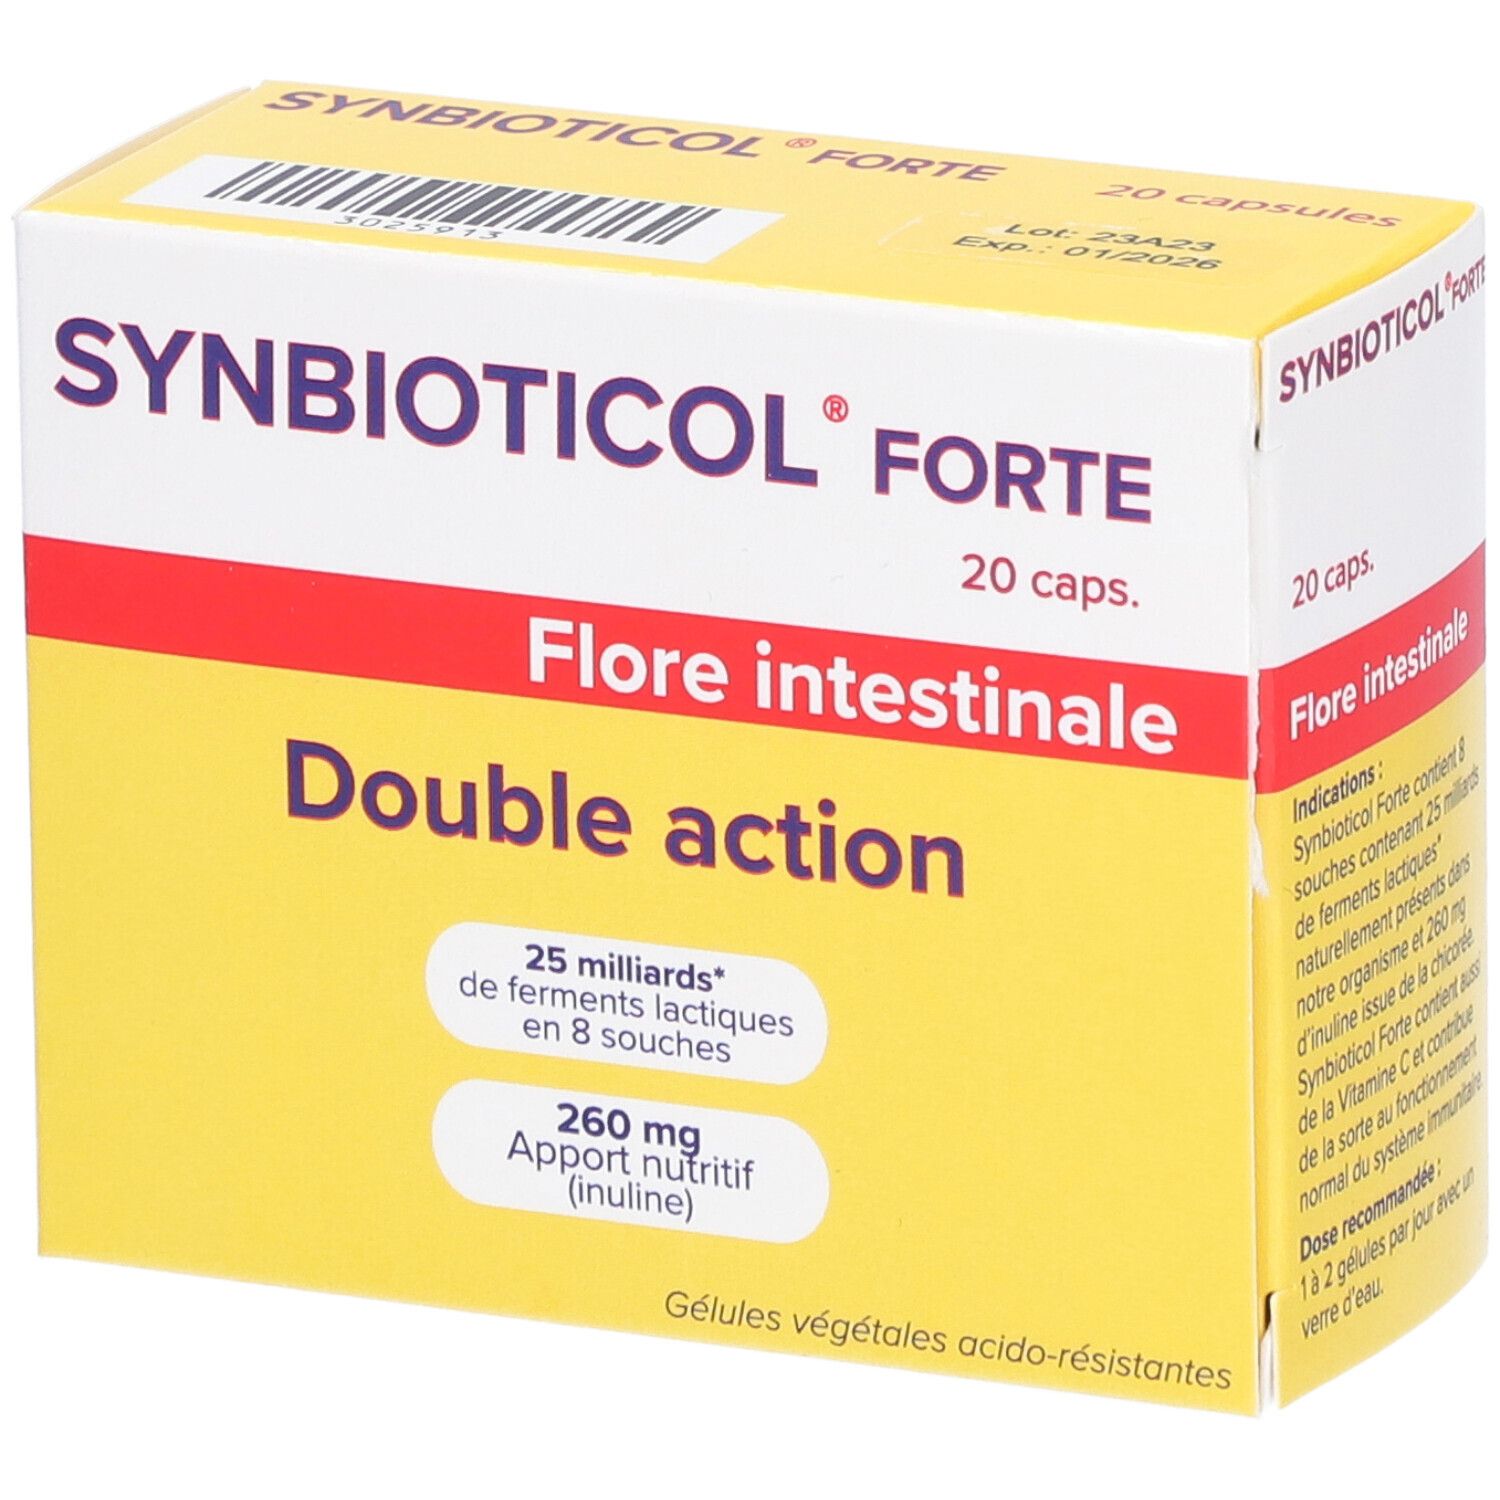 Synbioticol® Forte